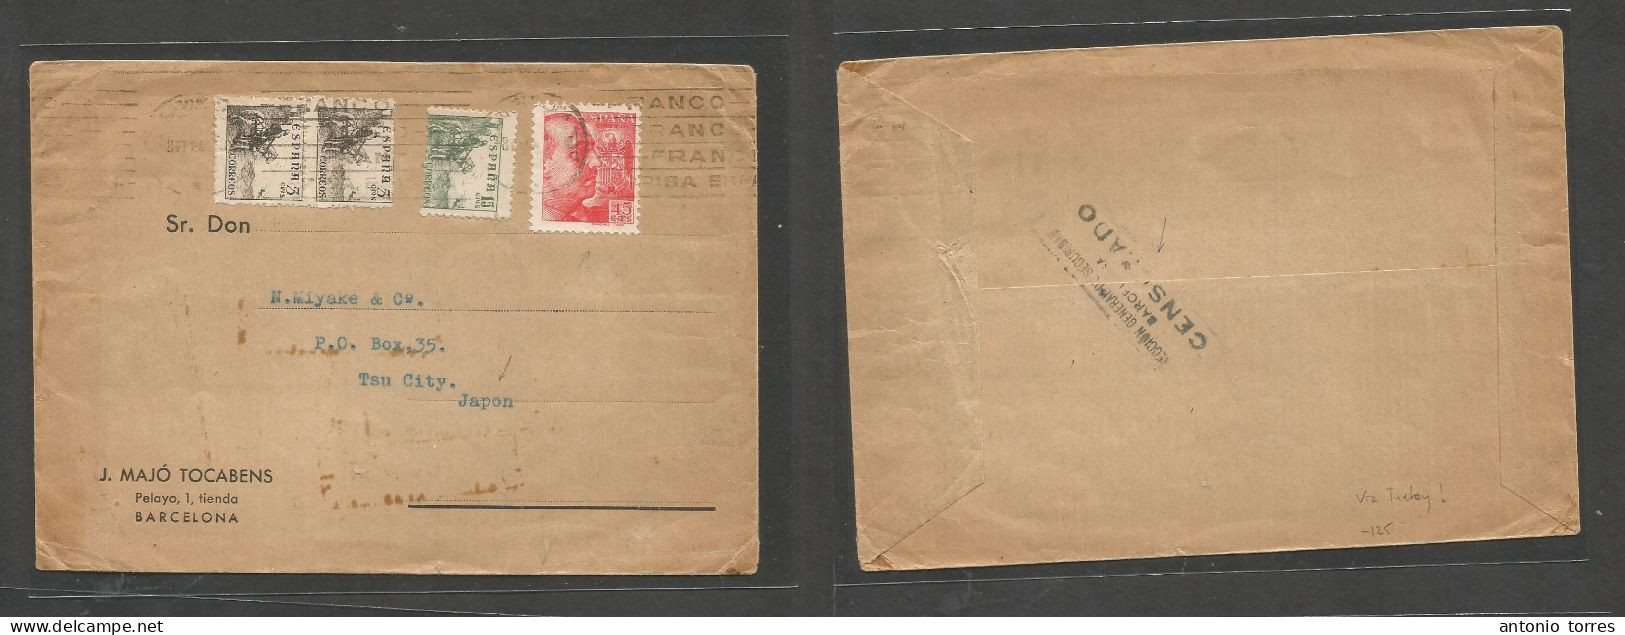 E-Guerra Civil. 1941 (8 Febr) Barcelona - Japon, Tsu City. Carta Con Franqueo Y Censura Española, Sin Control Nazi Alema - Other & Unclassified